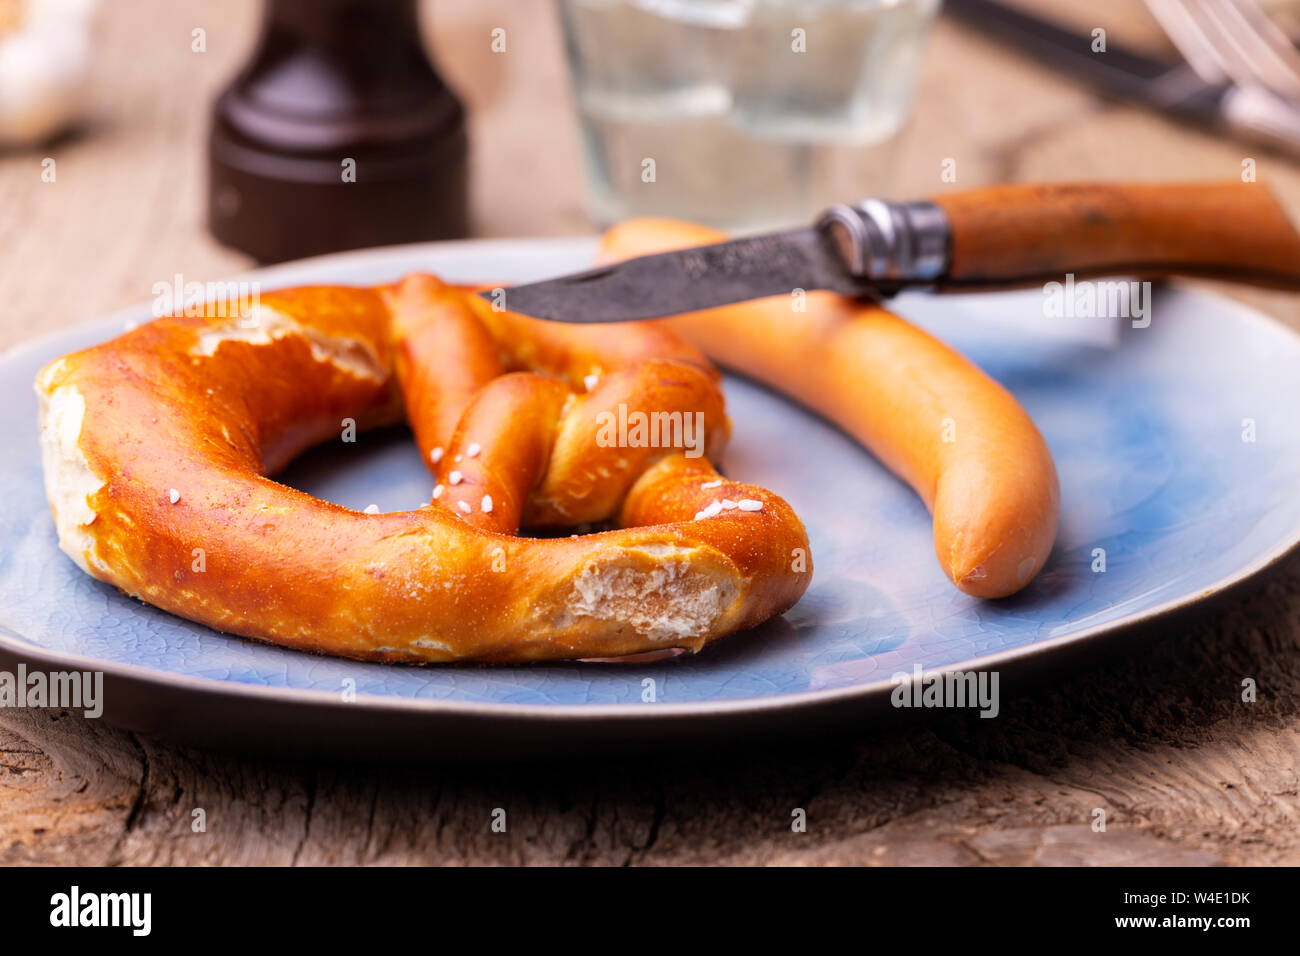 pretzel with frankfurt sausage on a plate Stock Photo